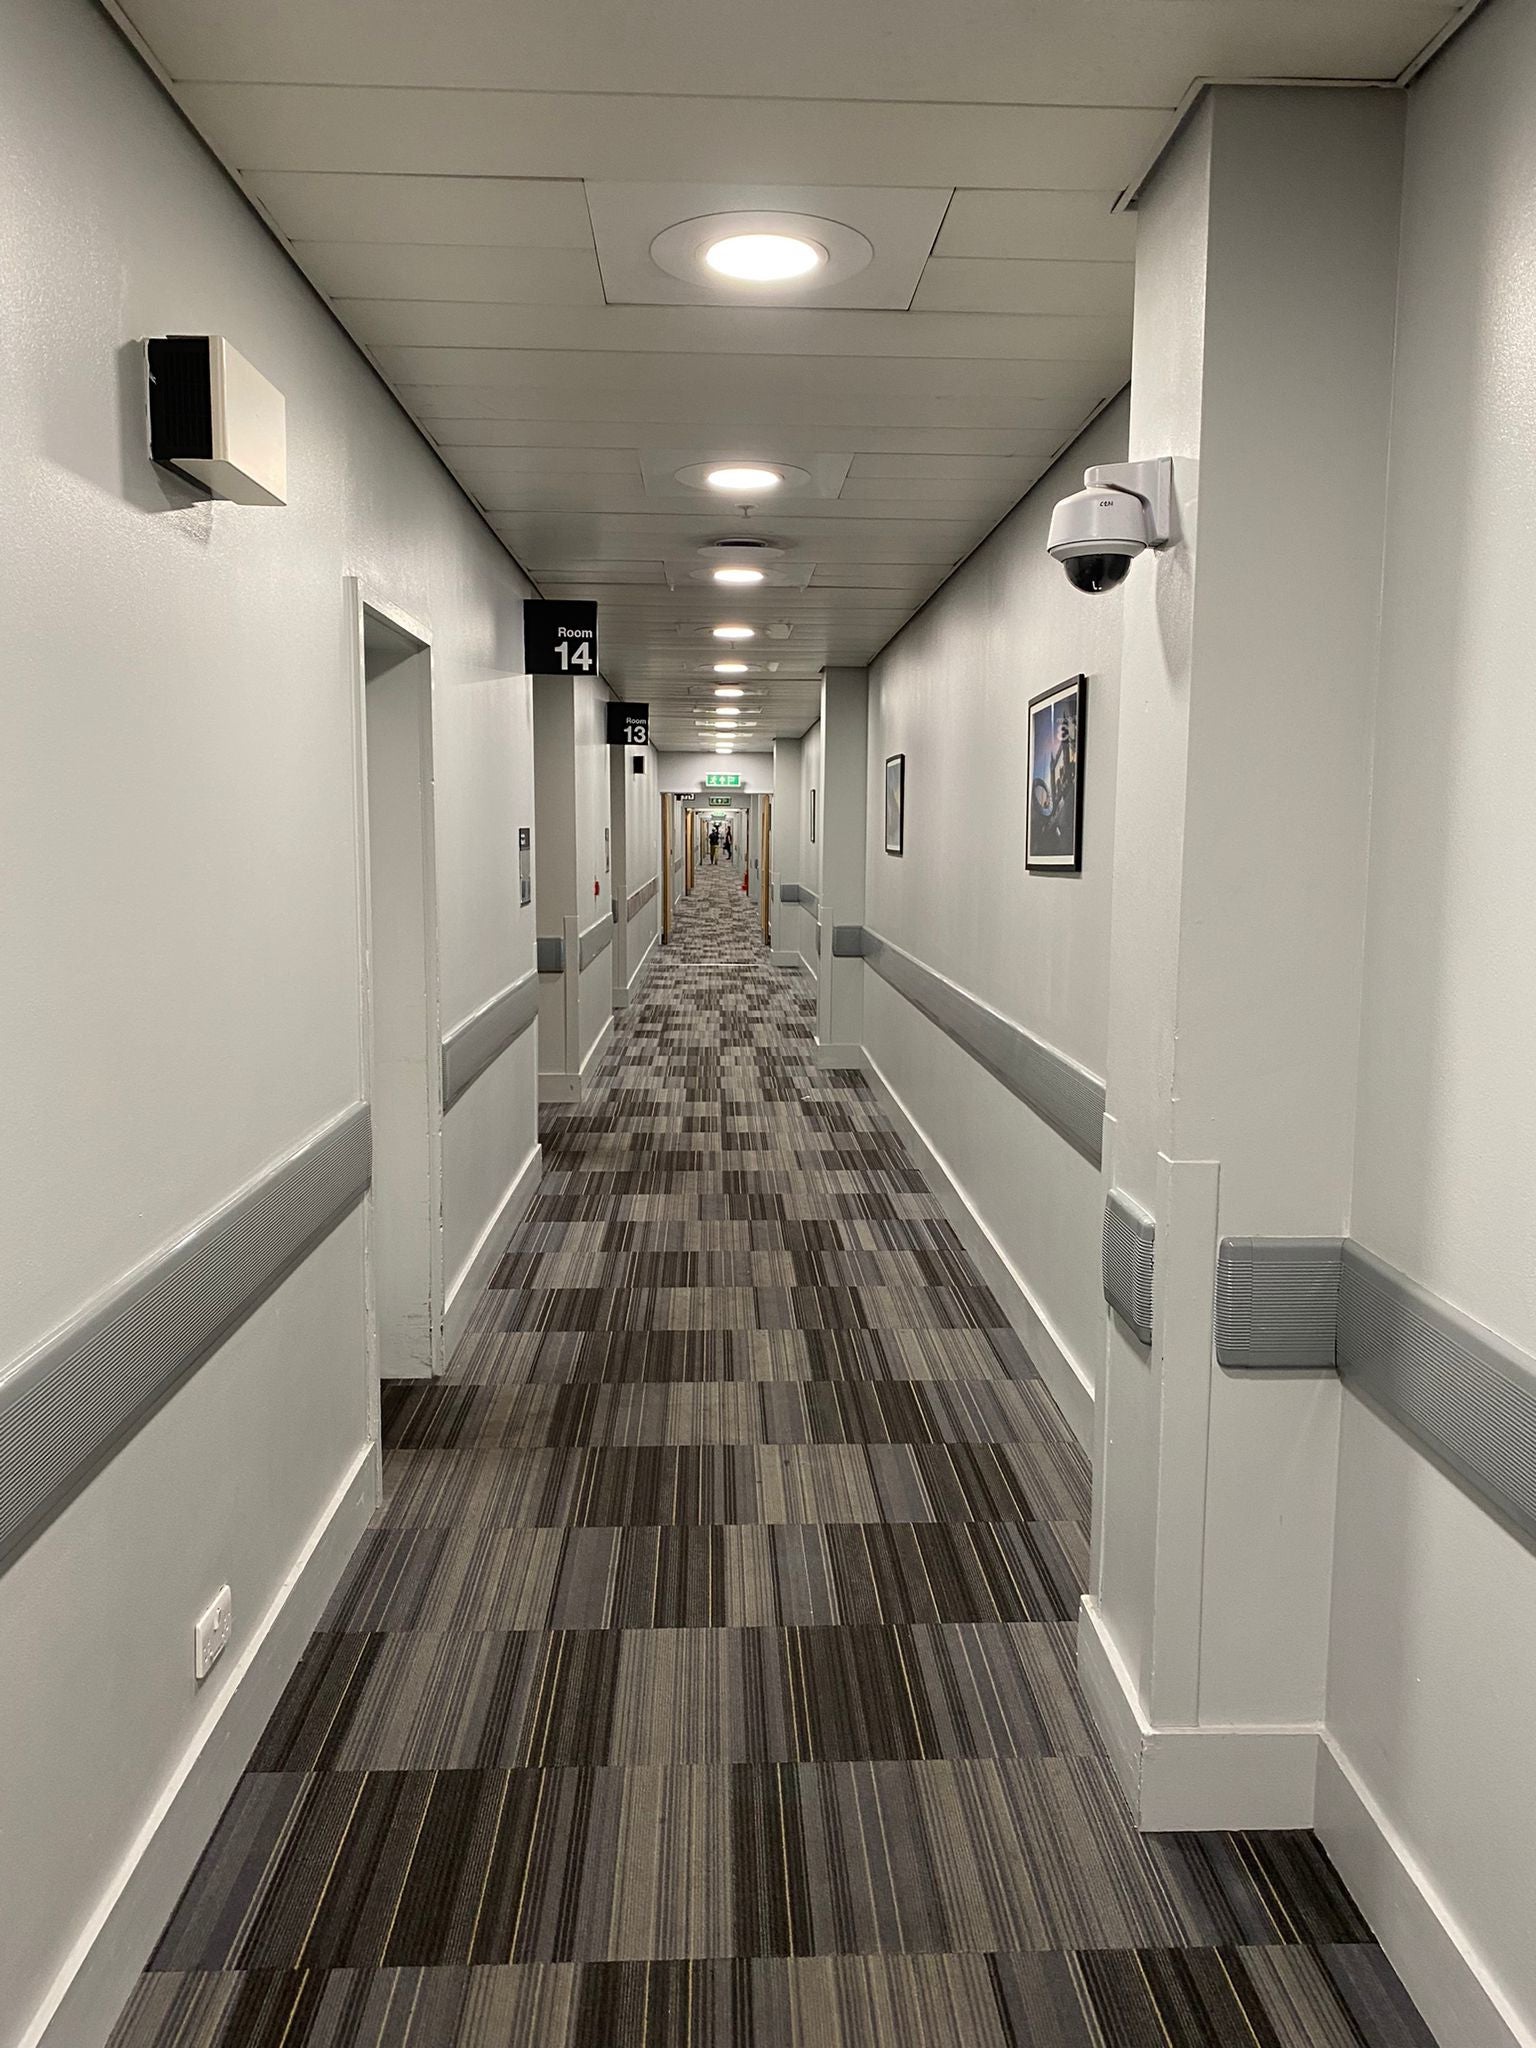 A photo of a bleak endless corridor.